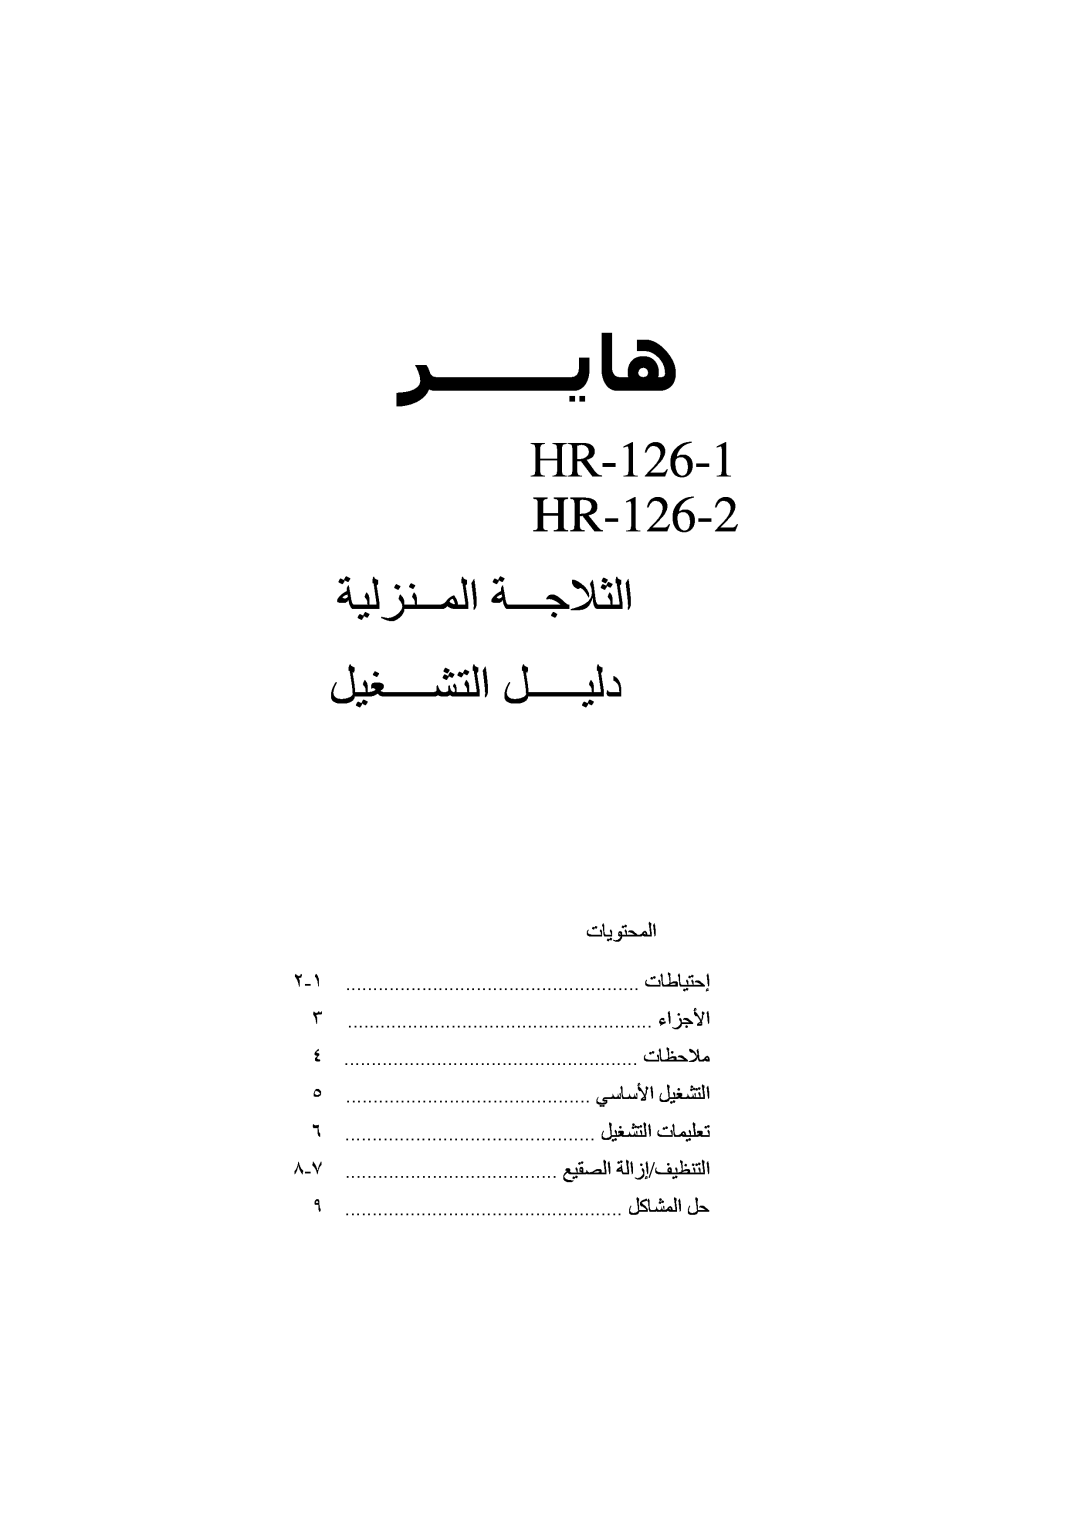 Haier manual ﺮﺮـــــﻳﺎه, HR-126-1 HR-126-2, ﺔﺔﻟﺰﻨــﻤﻟا ﺔـــﺟﻼﺜﻟا ﻞﻞﻐــــﺸﺘﻟا ﻞـــــﻴﻟد, ءءﺰﺟﻷا, ﻲﻲﺎﺳﻷا ﻞﻞﻐﺸﺘﻟا 